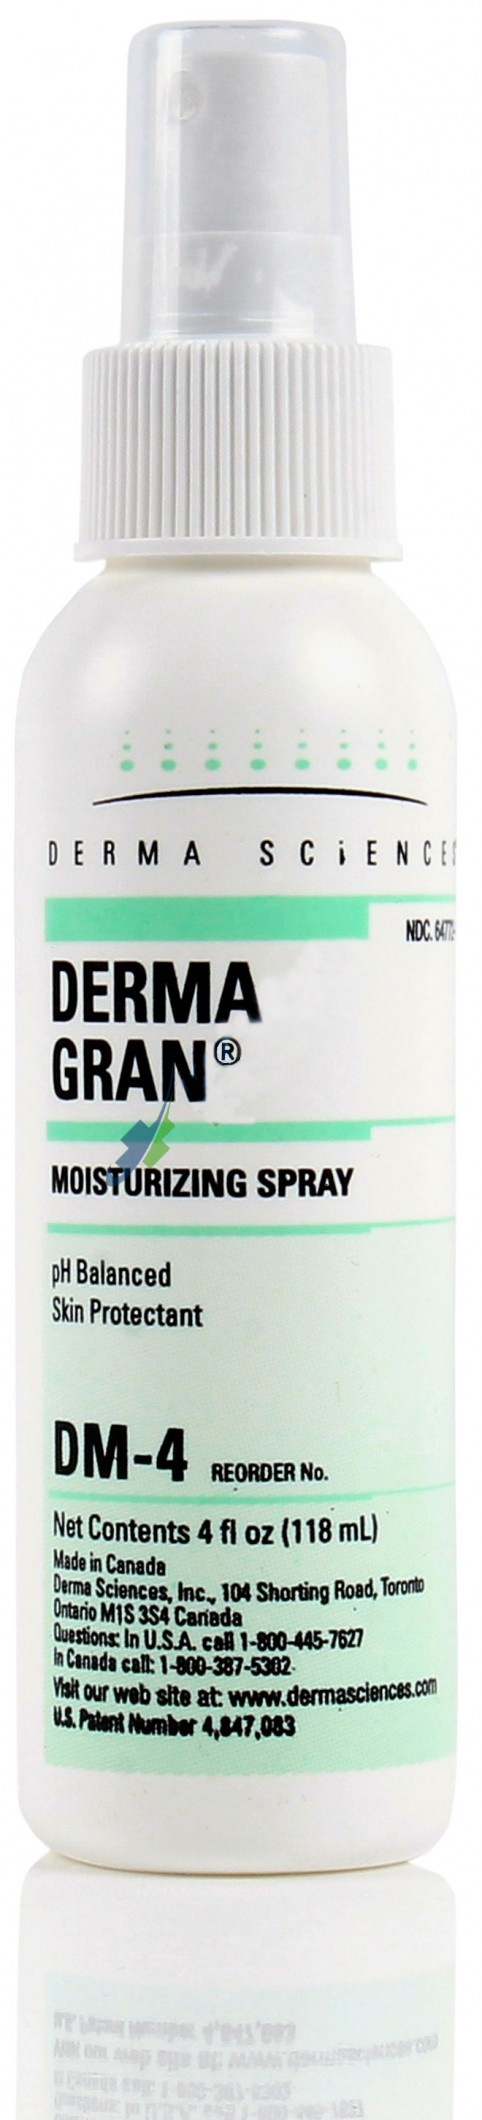 derma sciences dermagran moisturizing spray